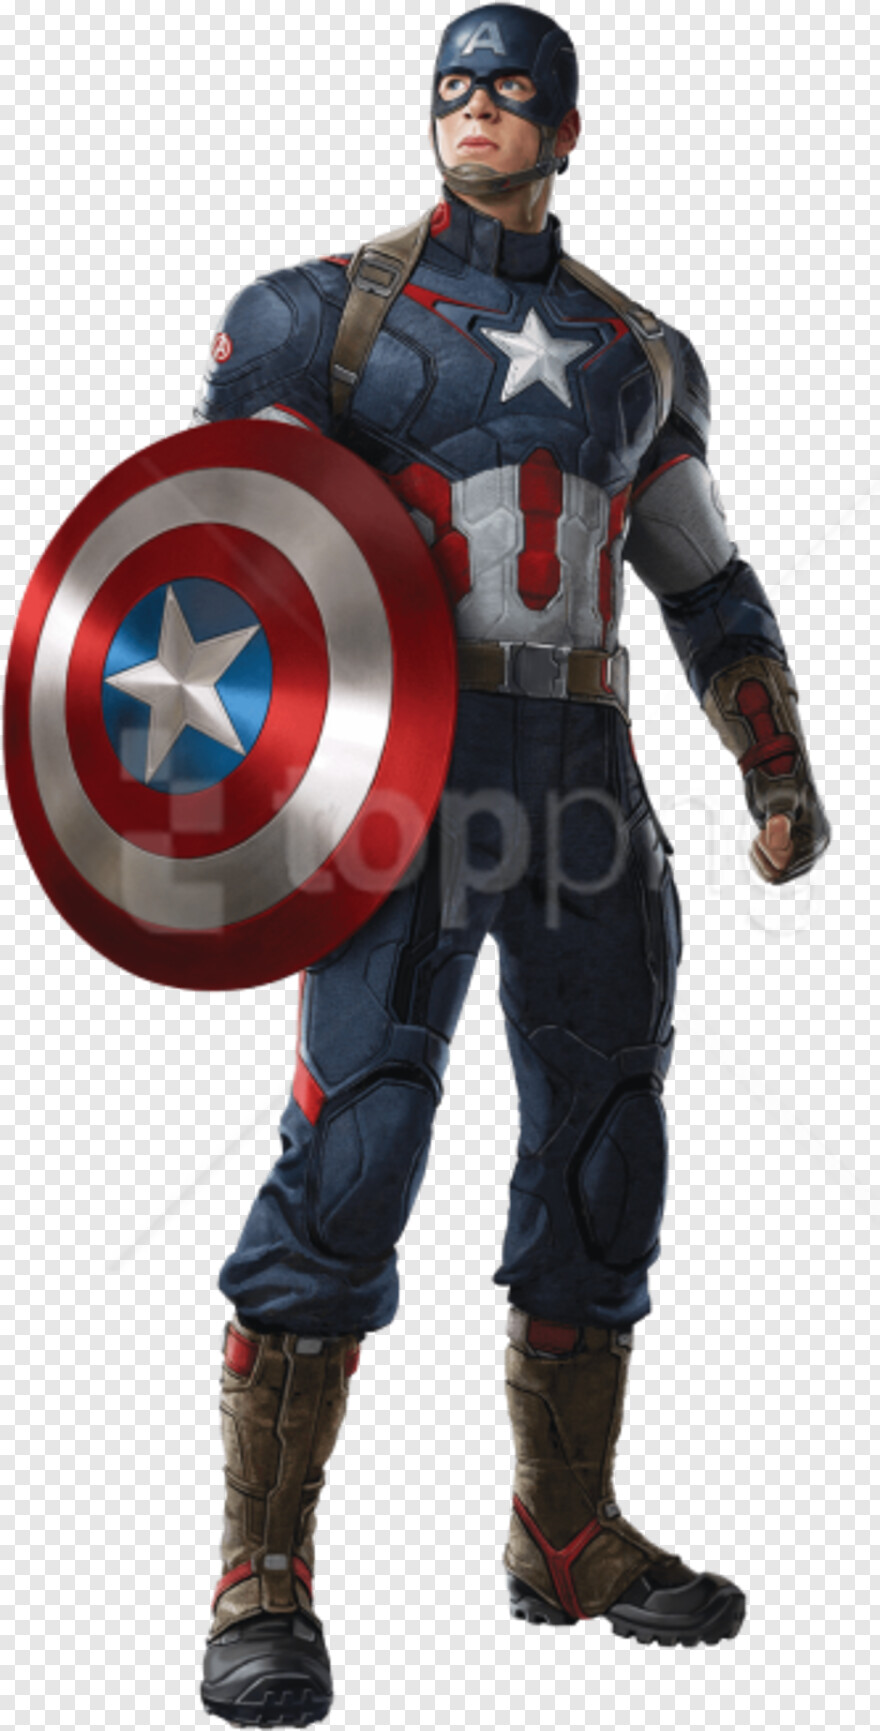  Captain America Civil War, Captain America Logo, Capitan America, Captain America Shield, Captain America, America